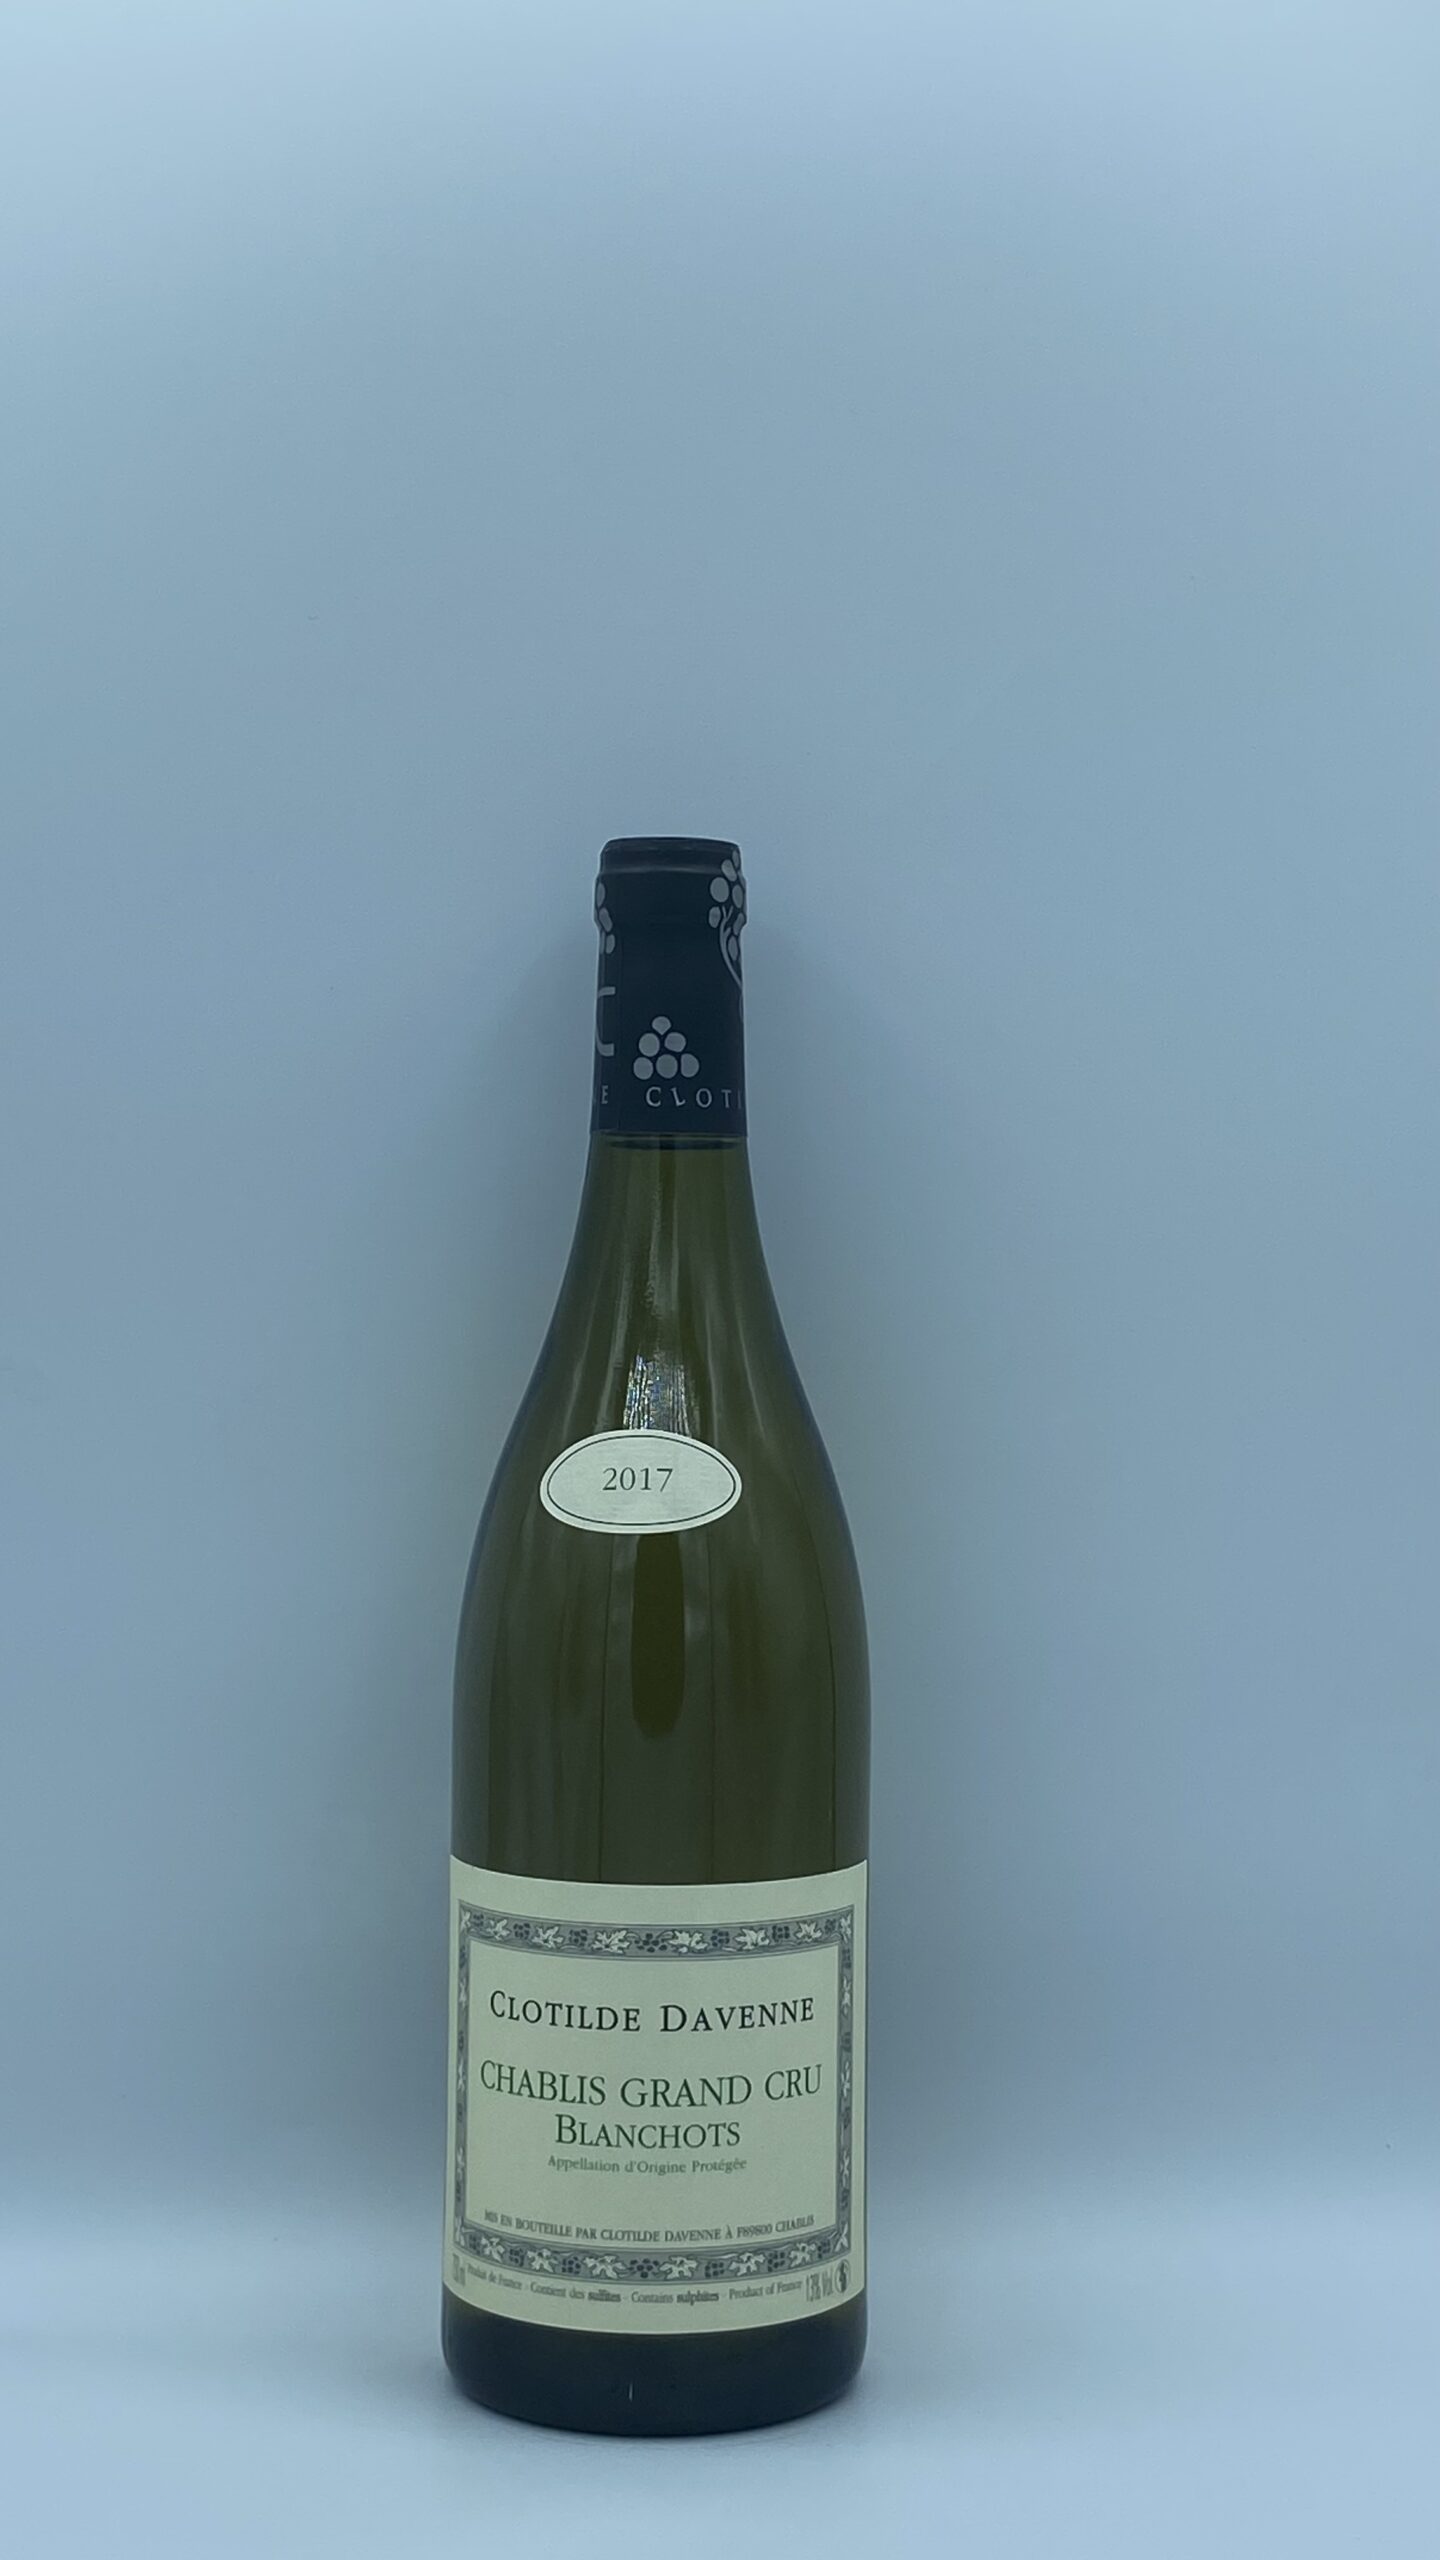 Bourgogne Chablis Grand Cru “Blanchot” 2017 Domaine Davenne